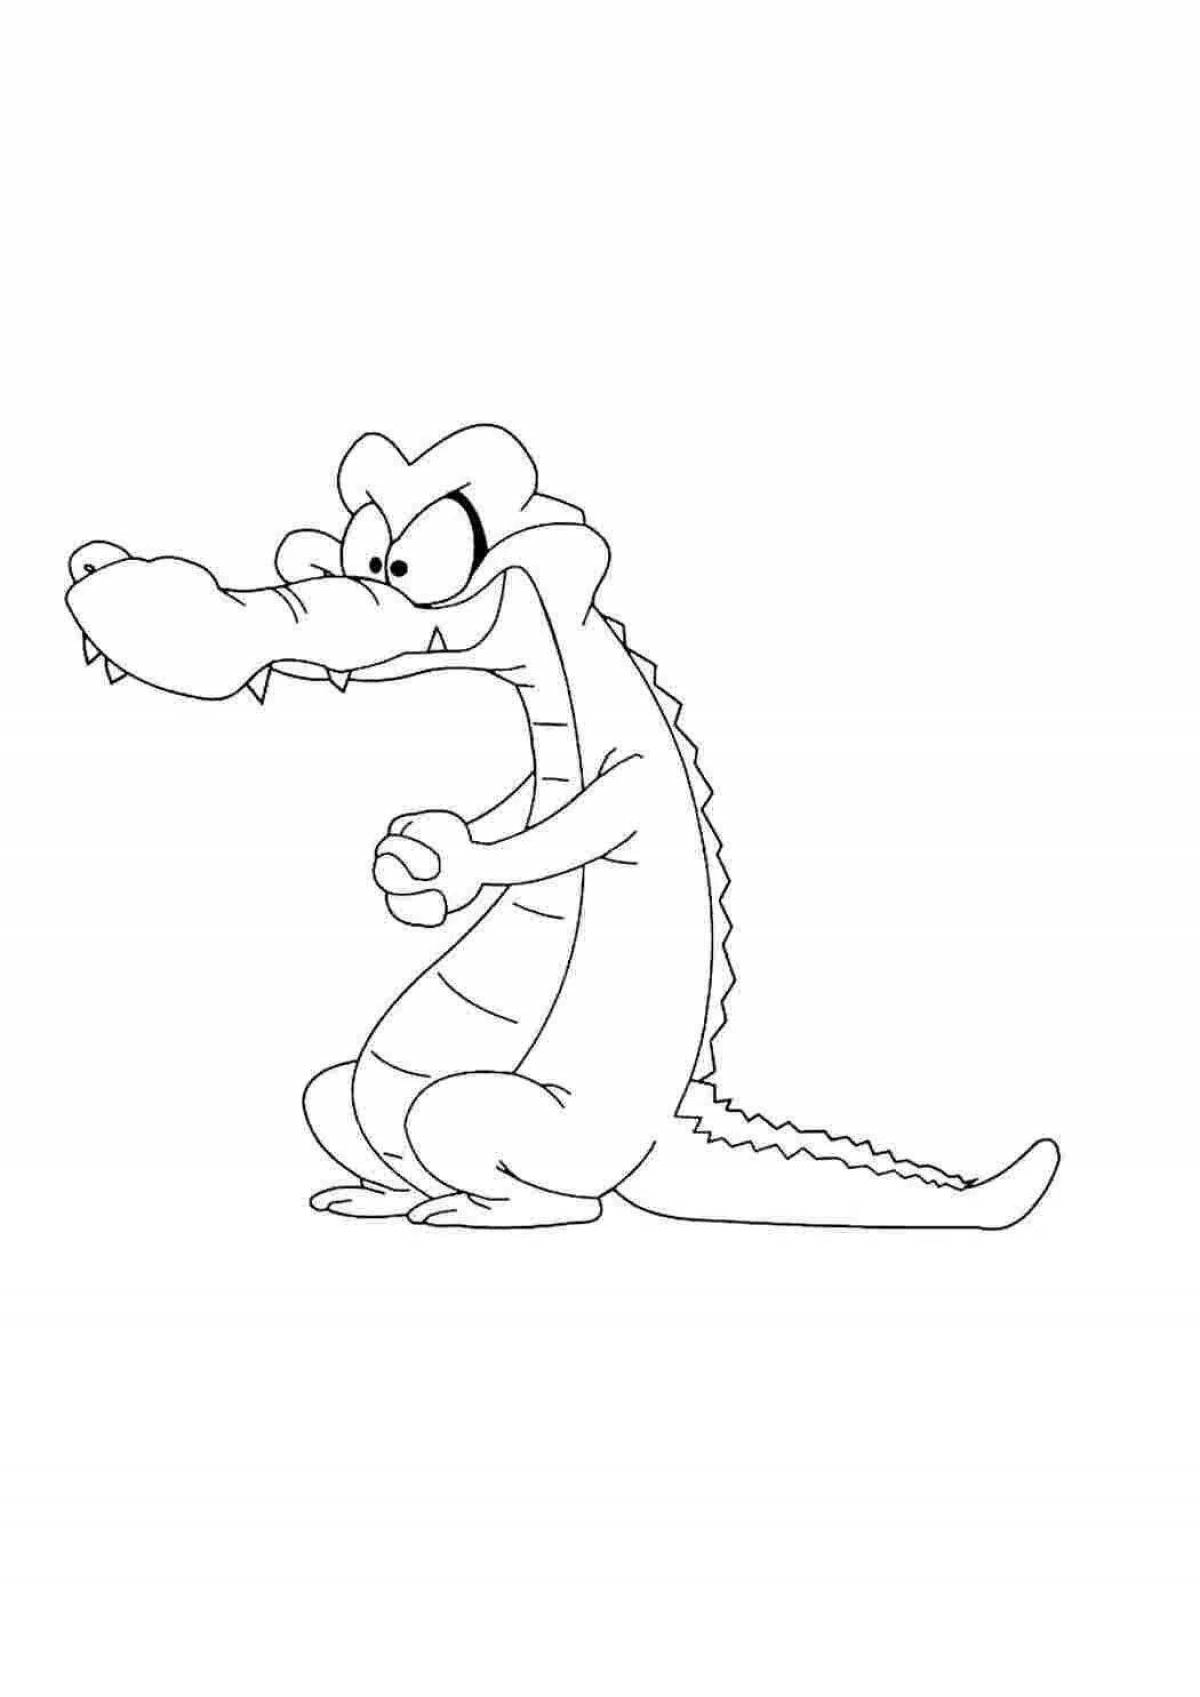 Crocodile drawing for kids #3